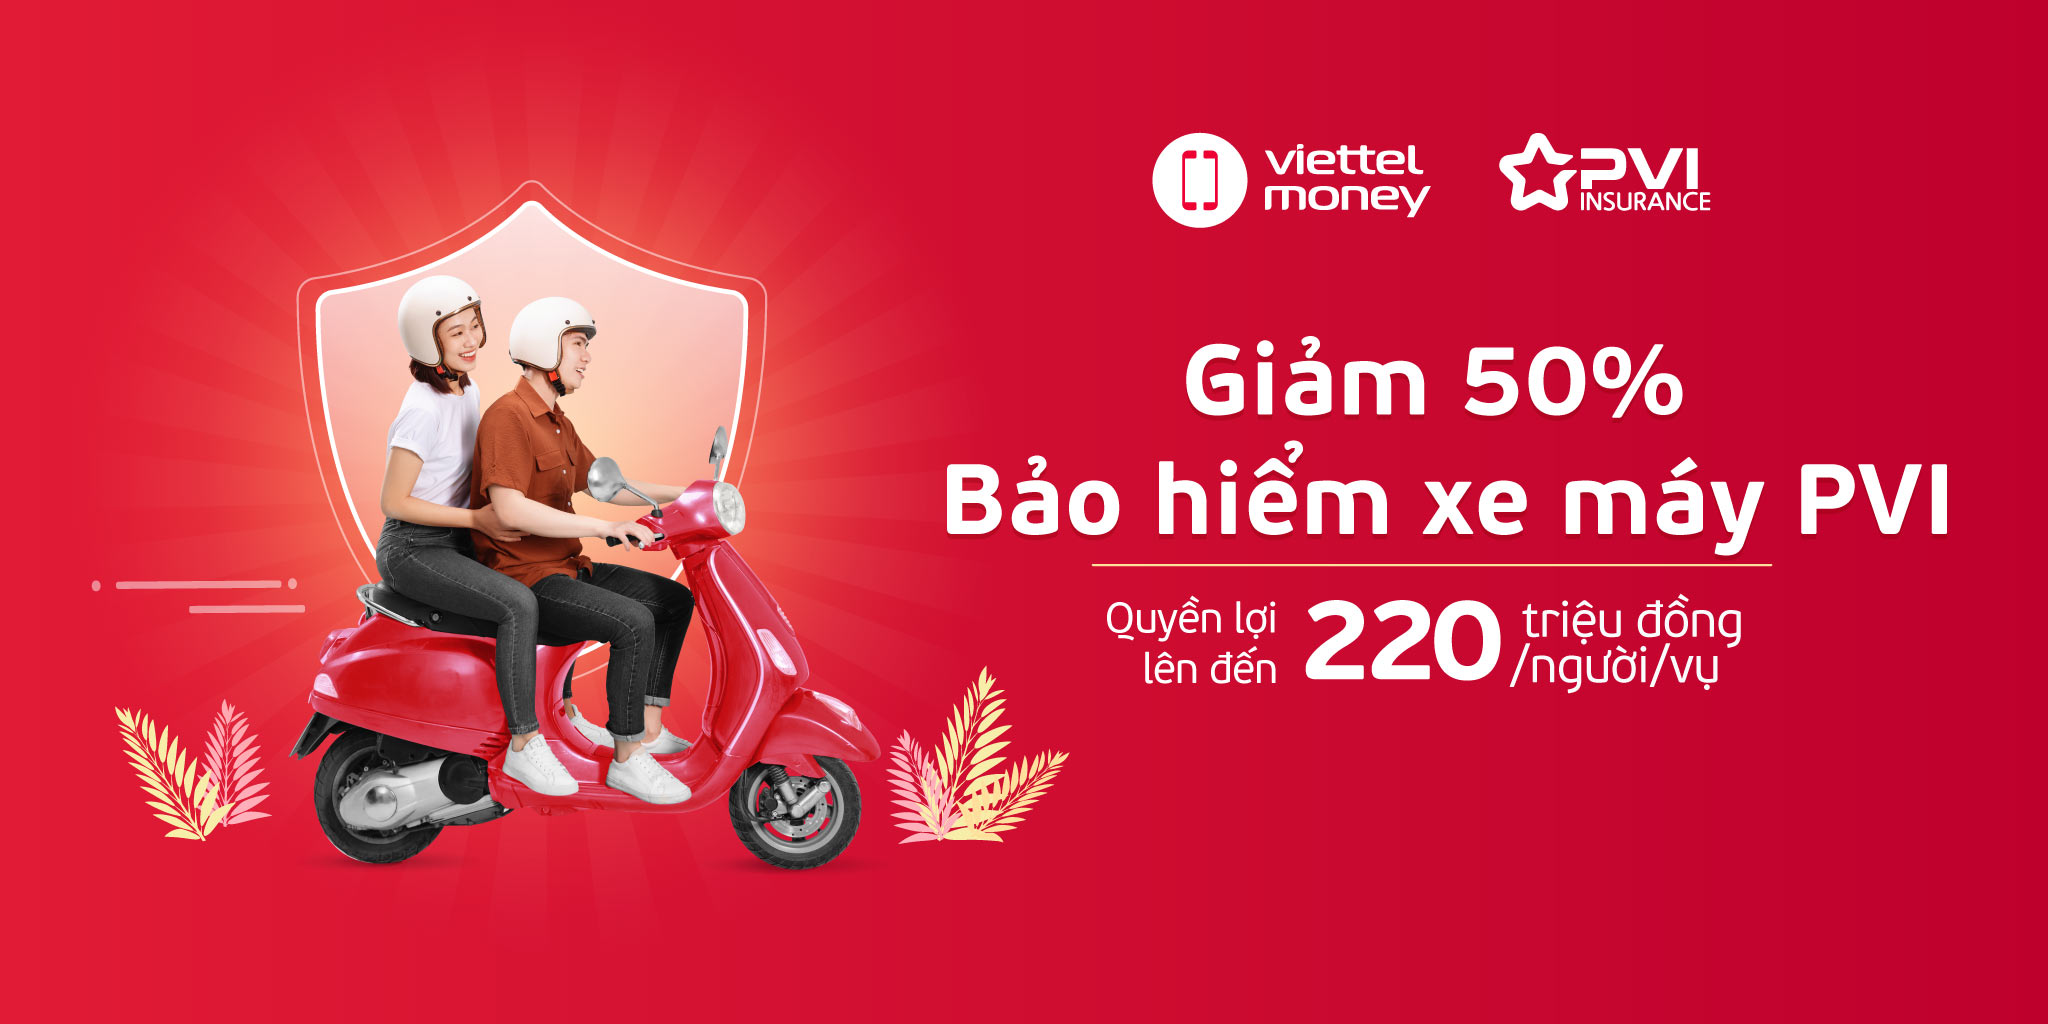 Viettel Money x PVI Insurance: Giảm 50% Bảo hiểm xe máy PVI